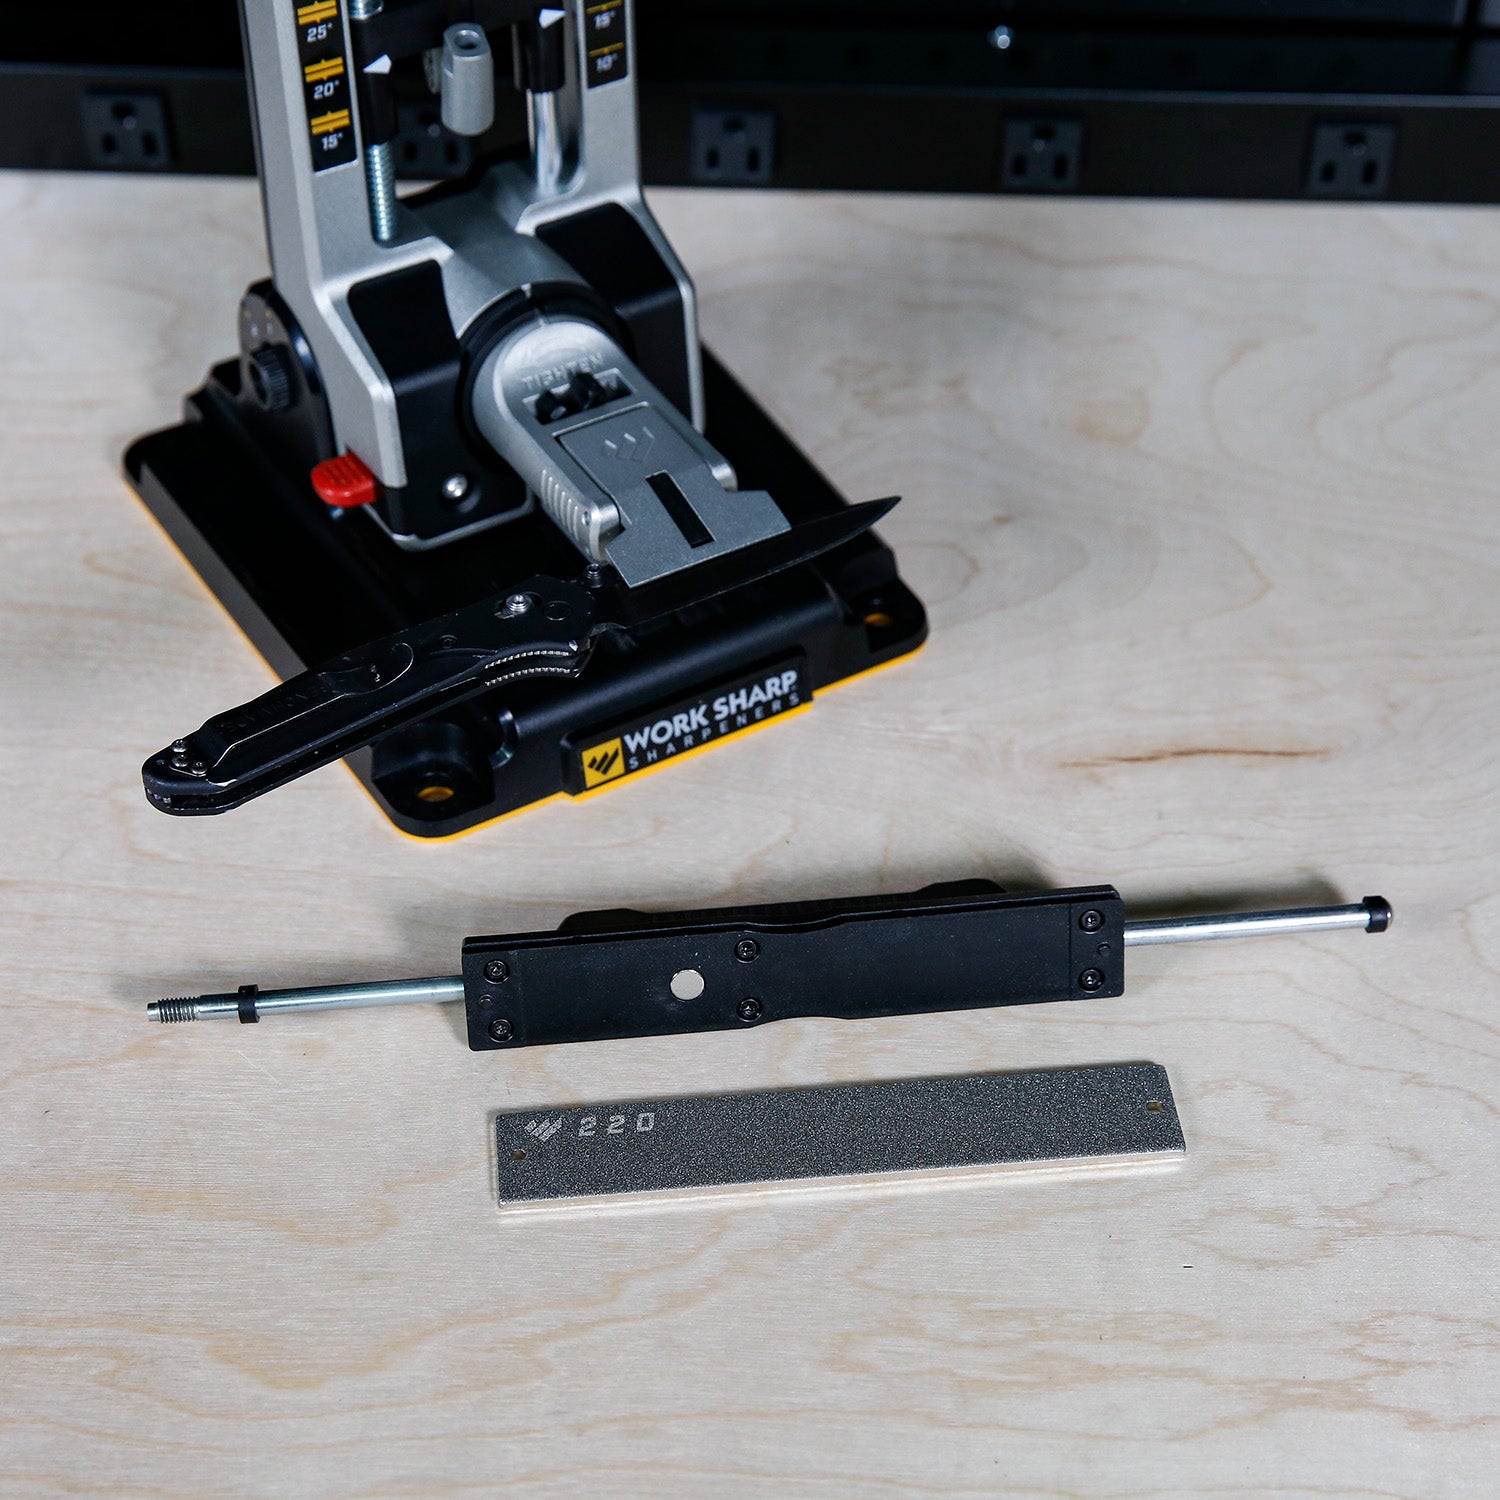 The Professional Precision Adjust Knife Sharpener